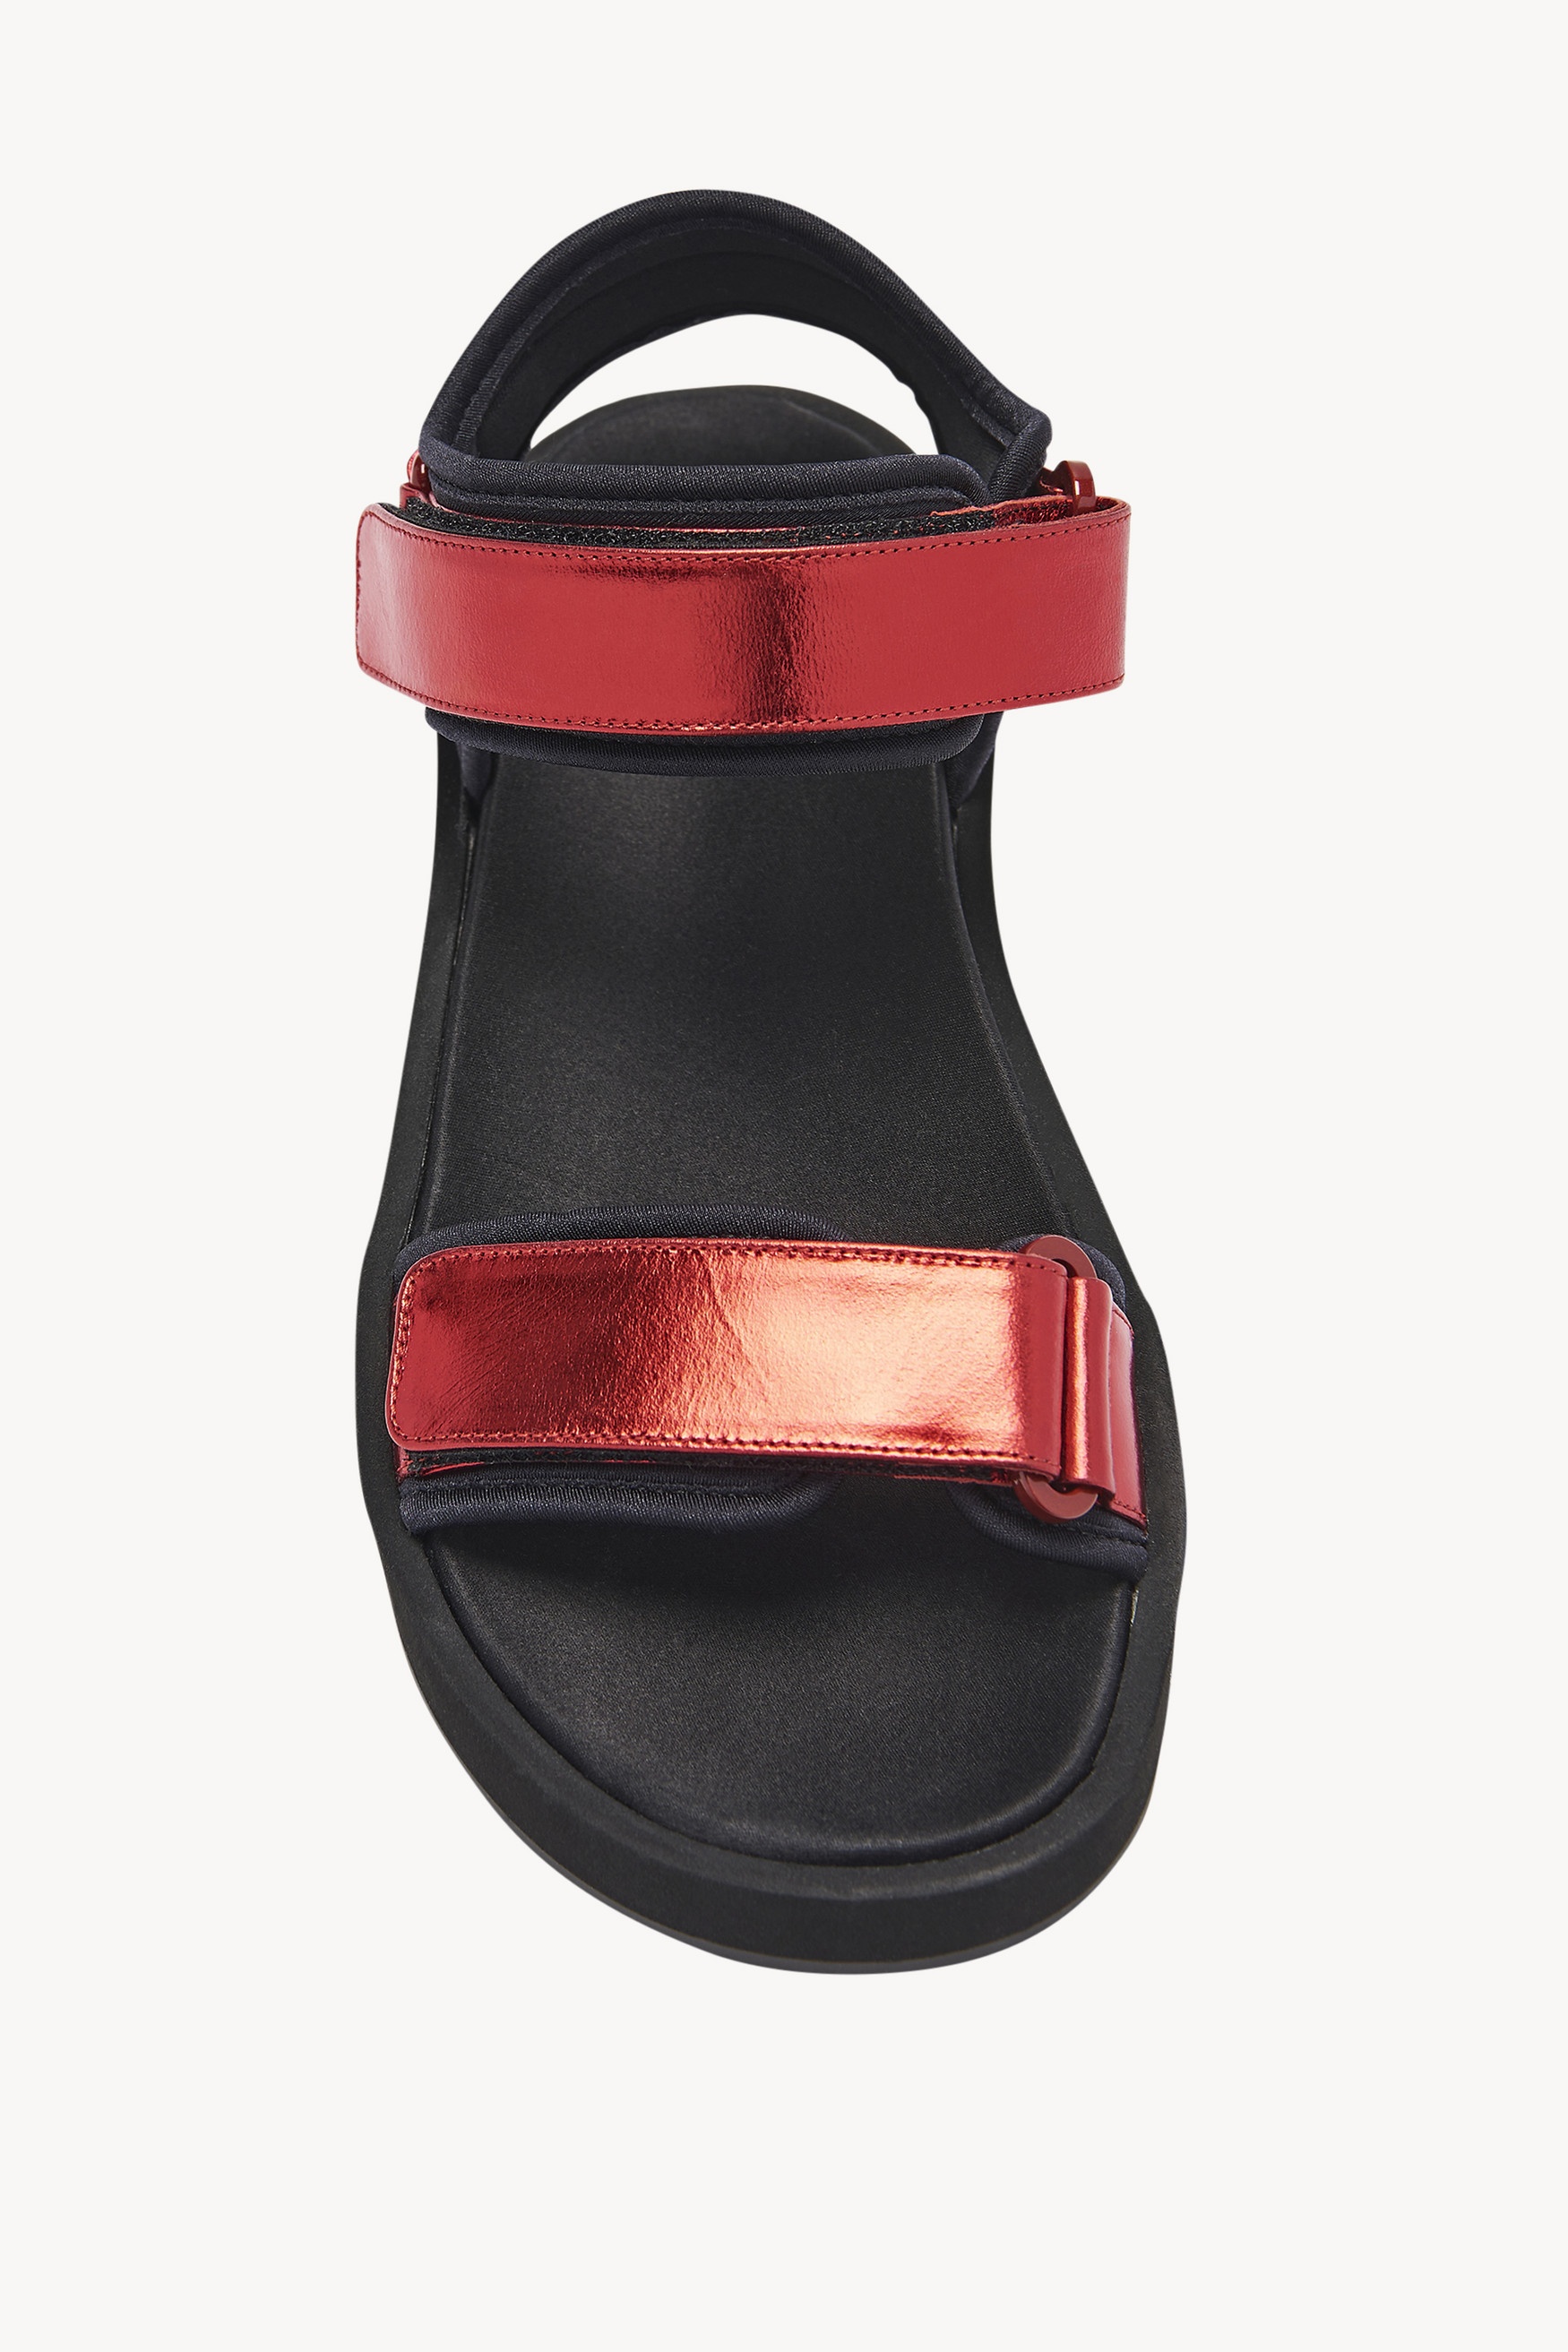 Hook and Loop Sandal in Leather - 3